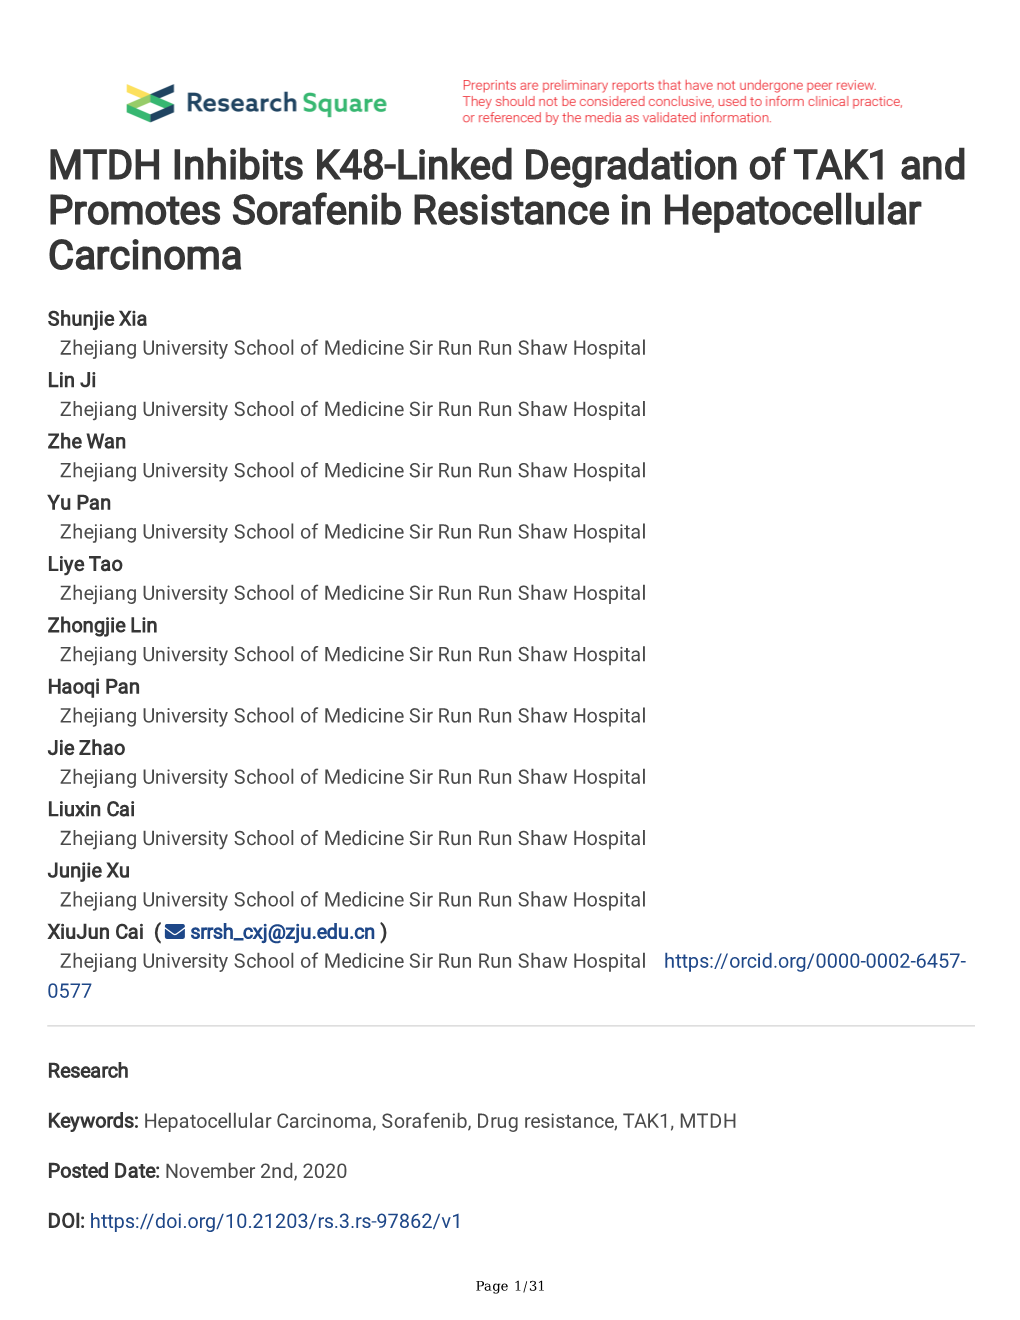 MTDH Inhibits K48-Linked Degradation of TAK1 and Promotes Sorafenib Resistance in Hepatocellular Carcinoma